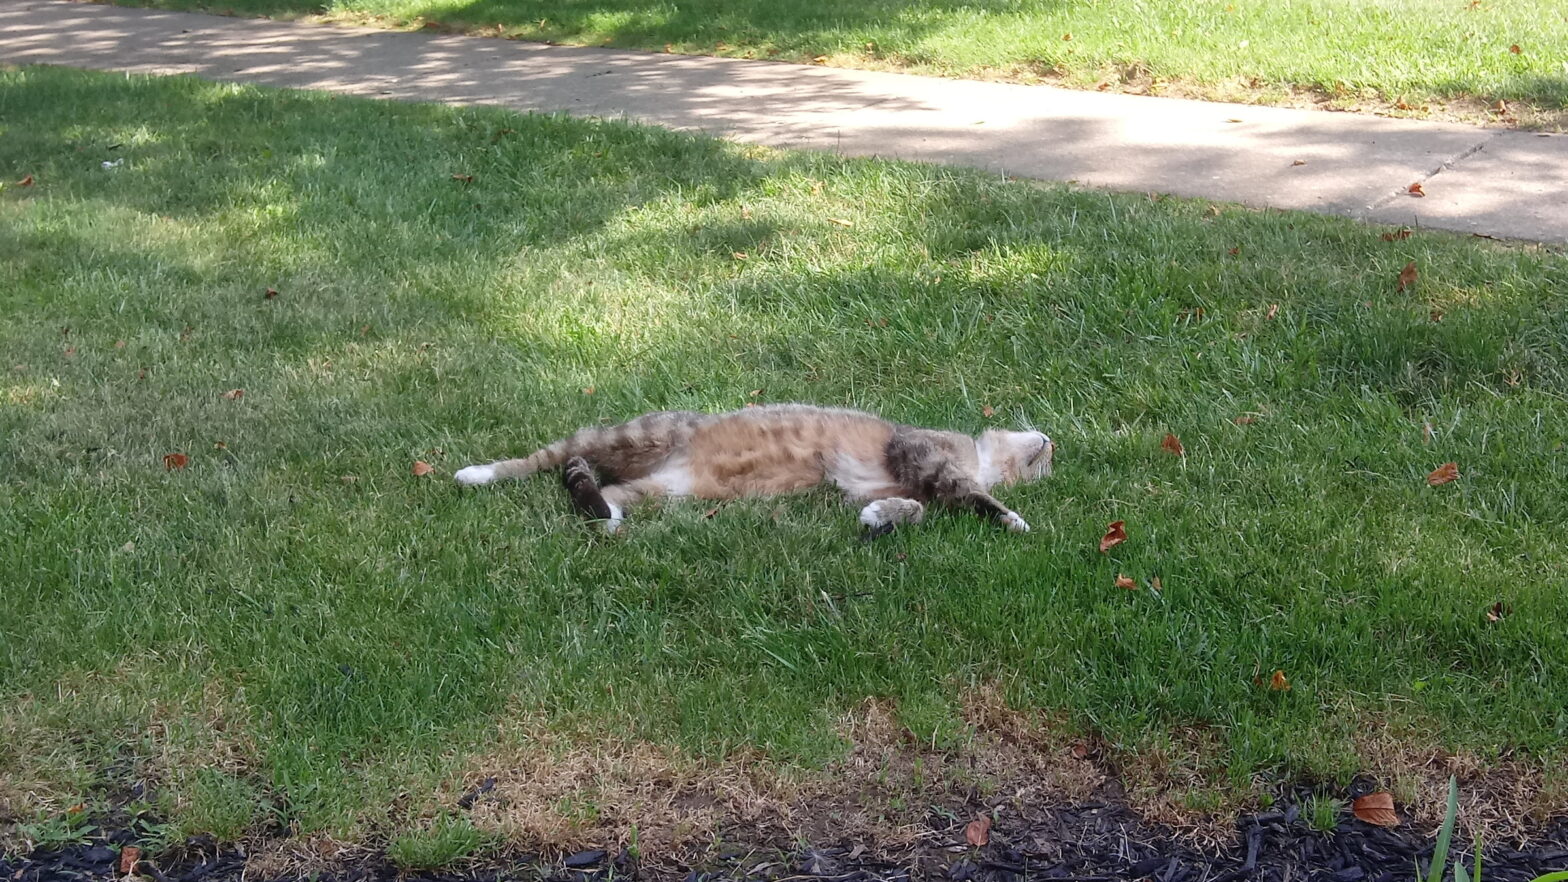 A neighborhood cat, sleeping in the sun